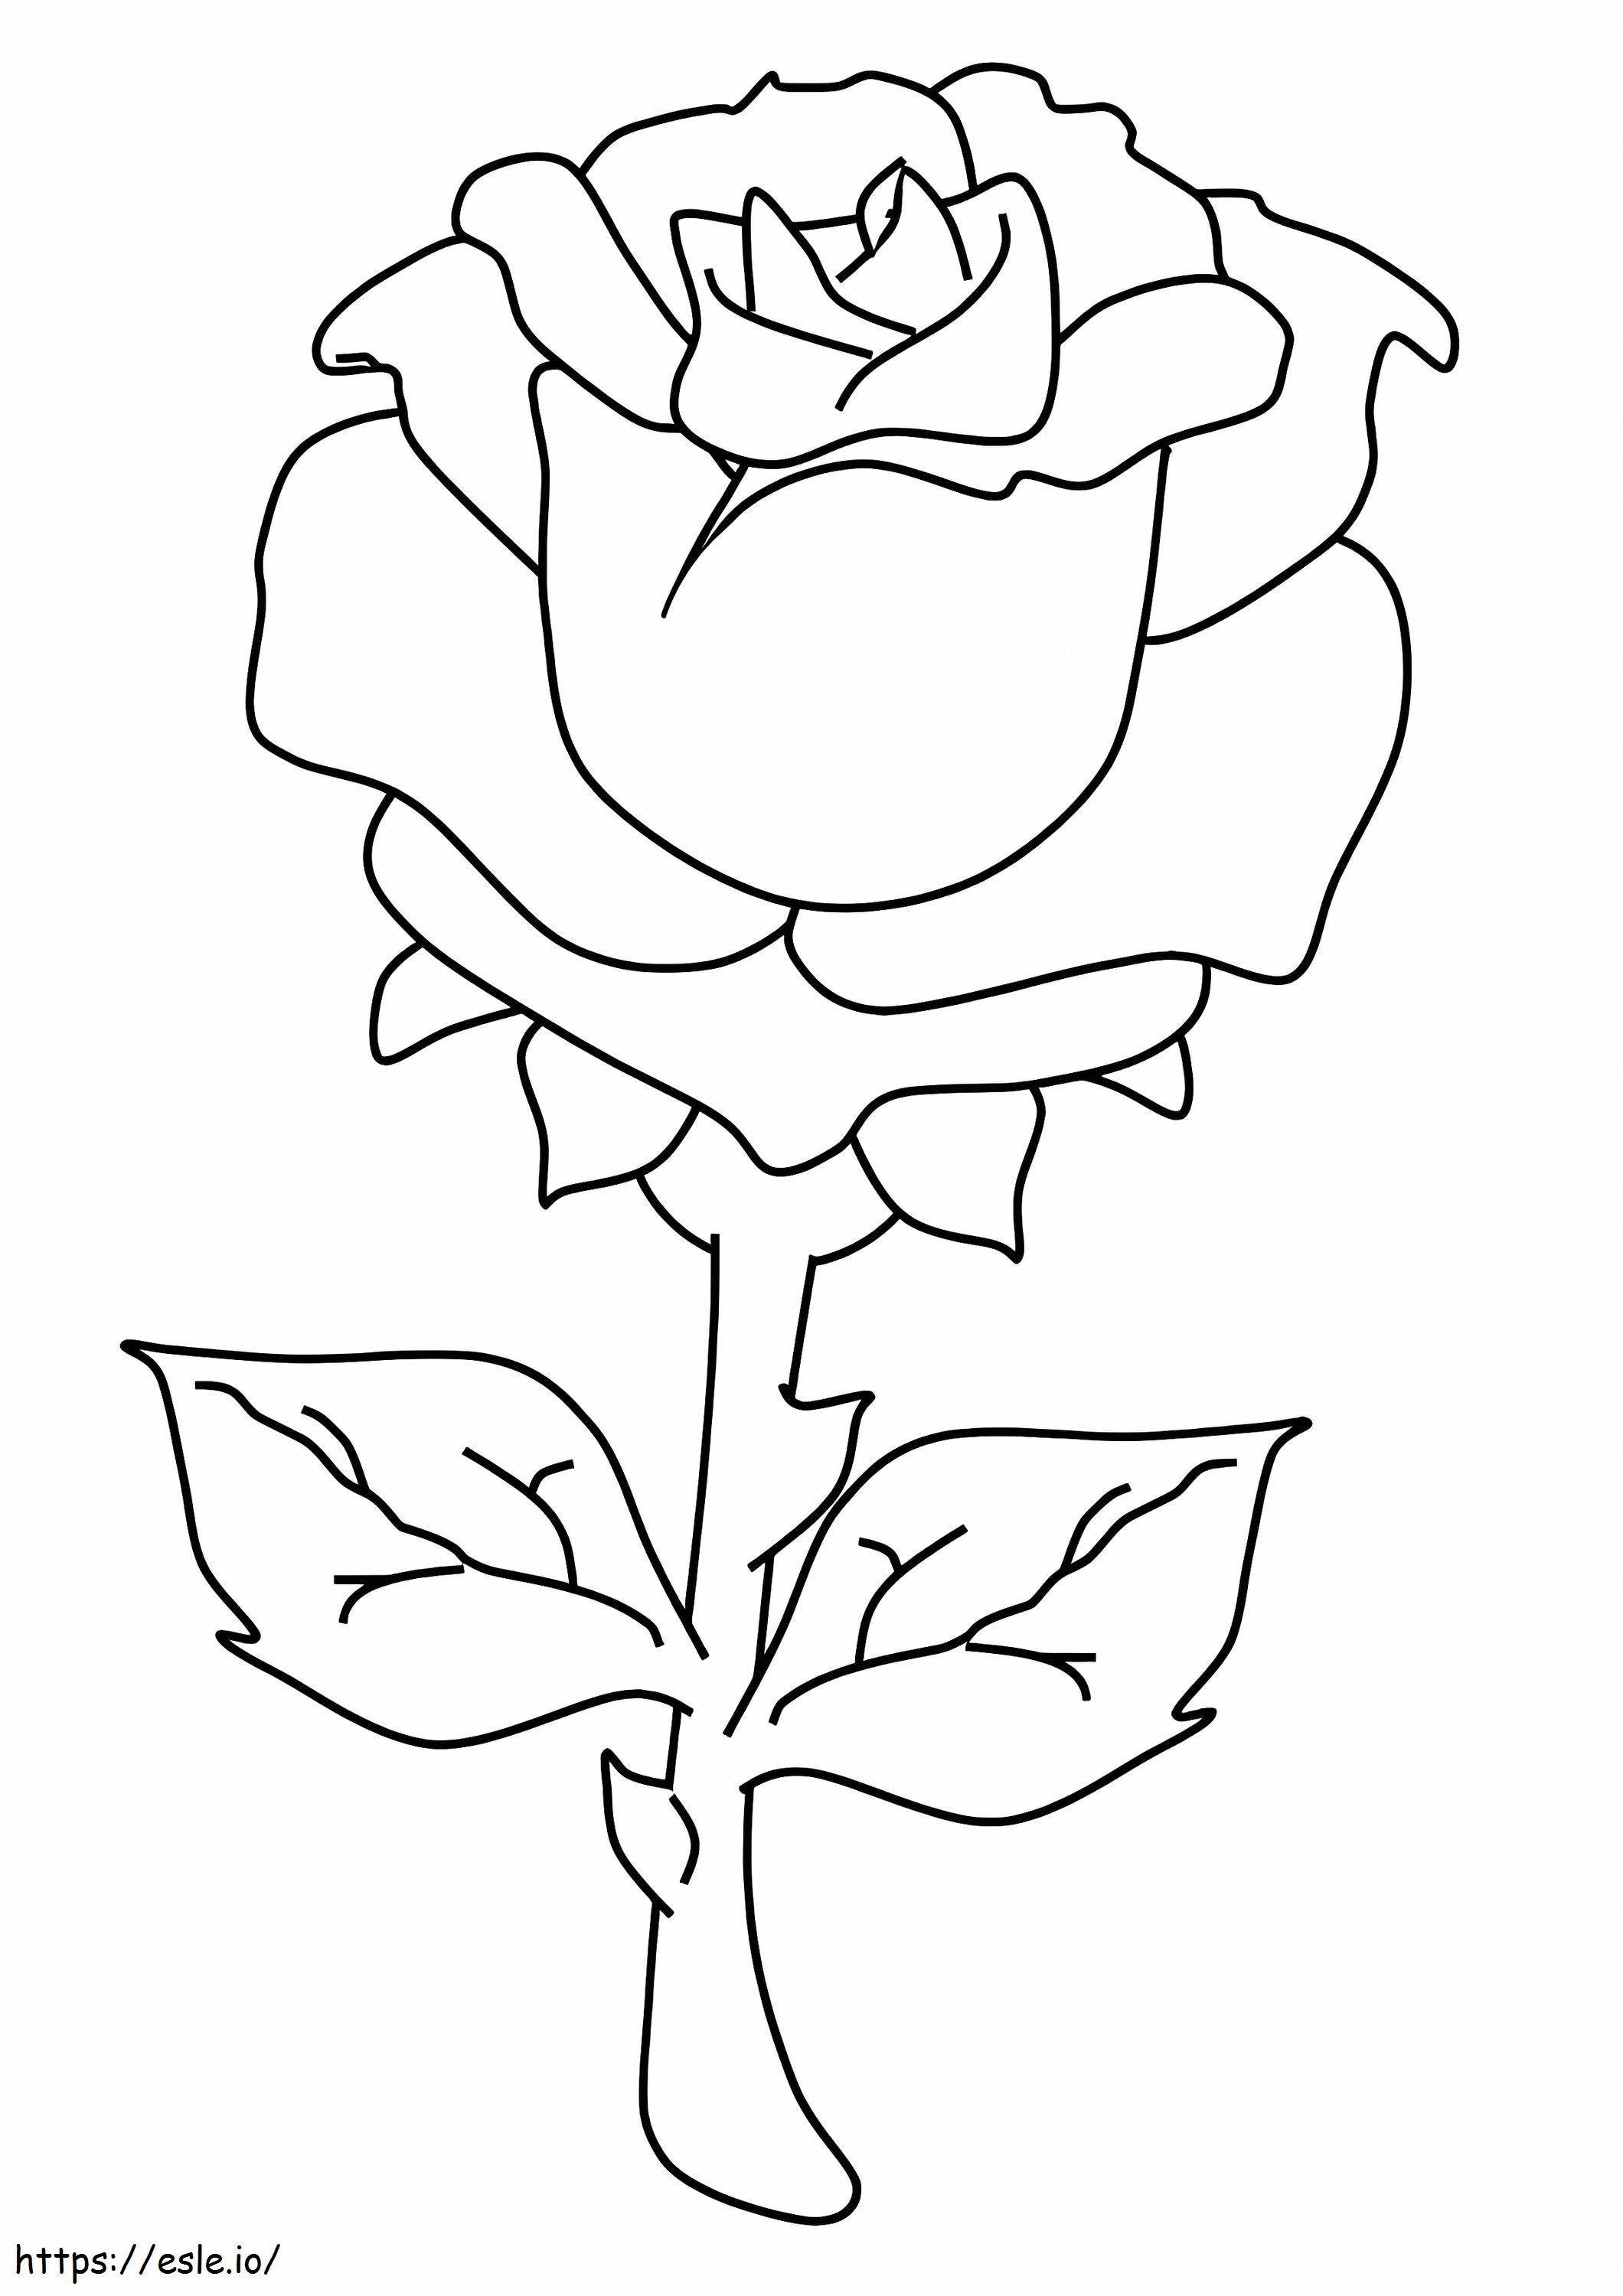  Piękna róża A4 kolorowanka